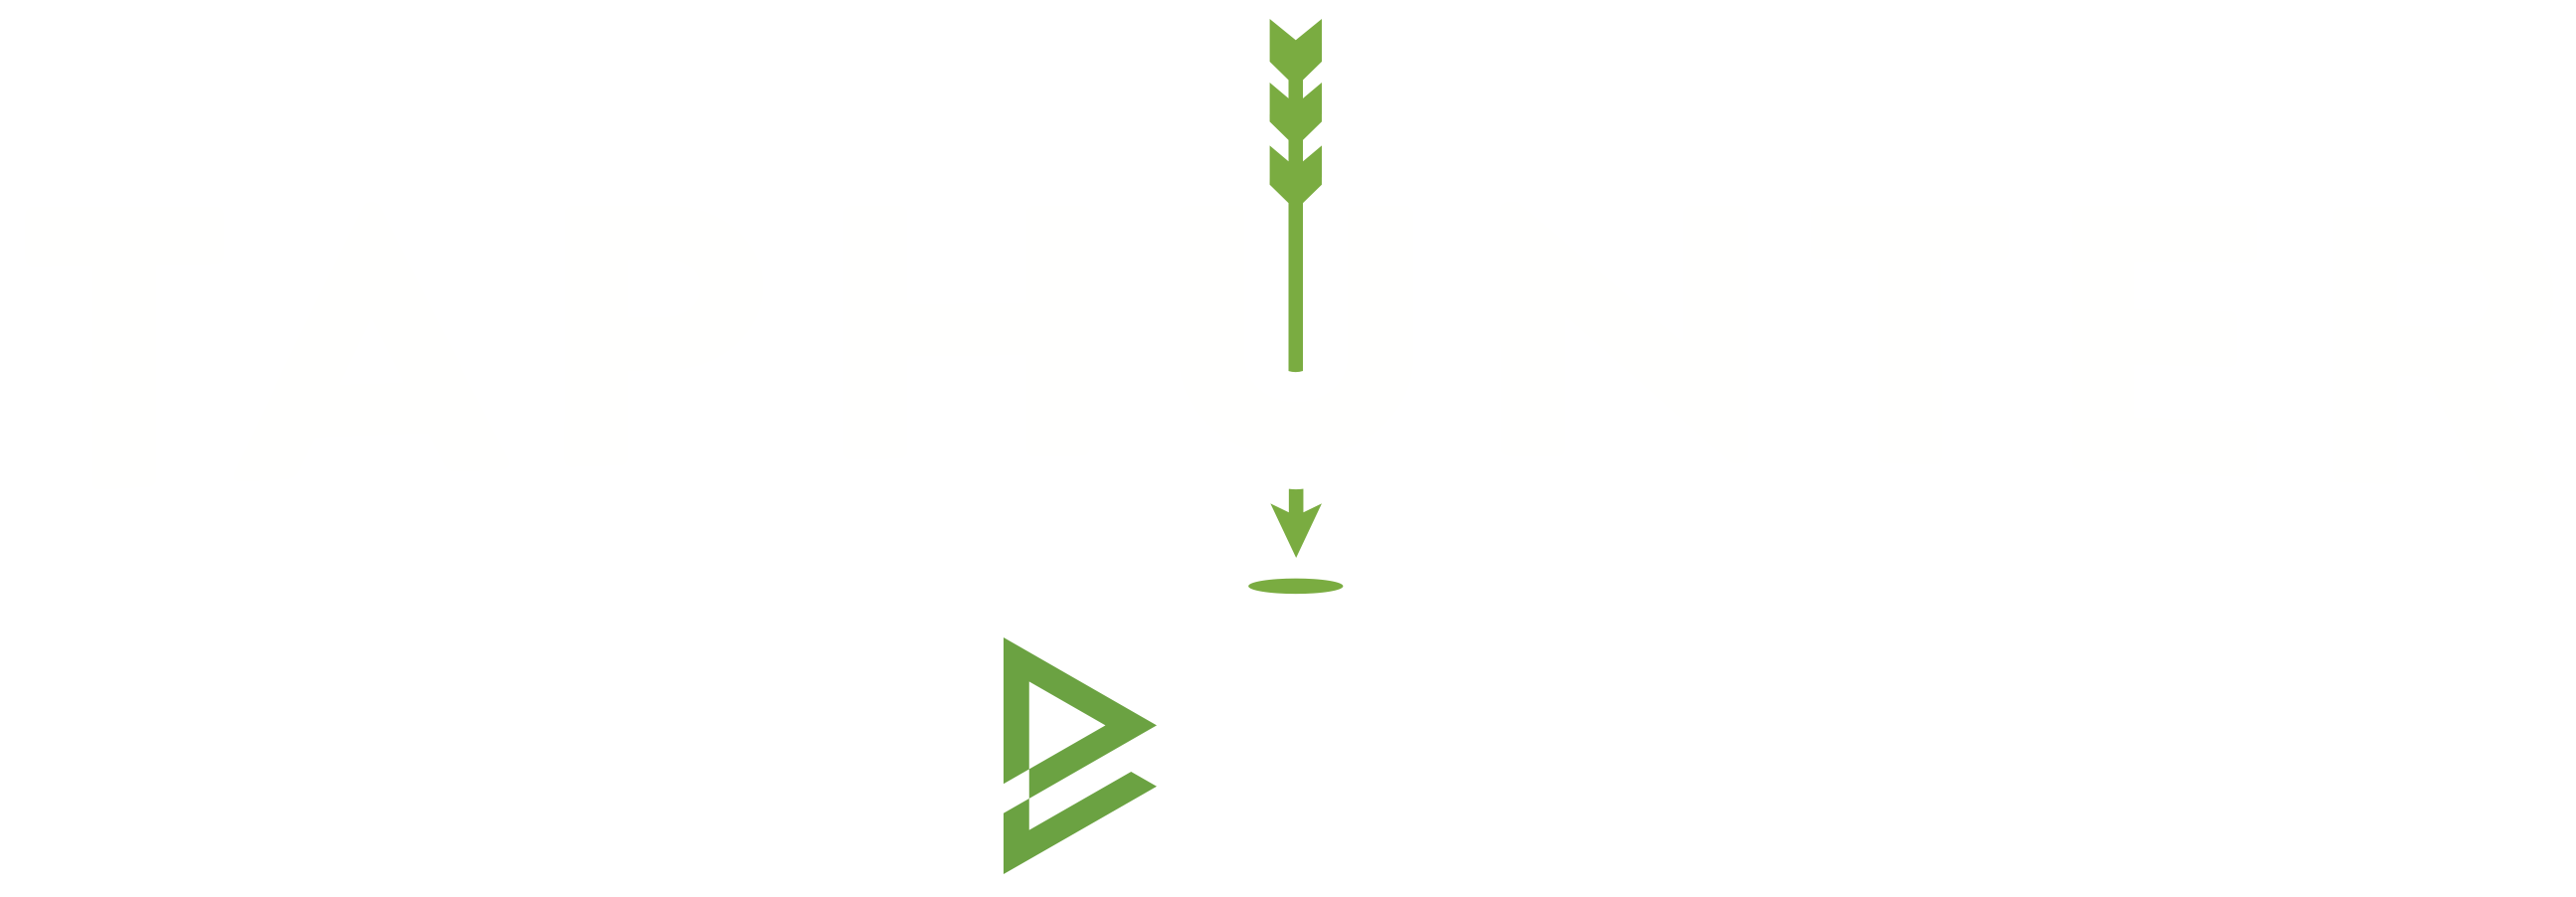 Evergreen-TapHunter logo